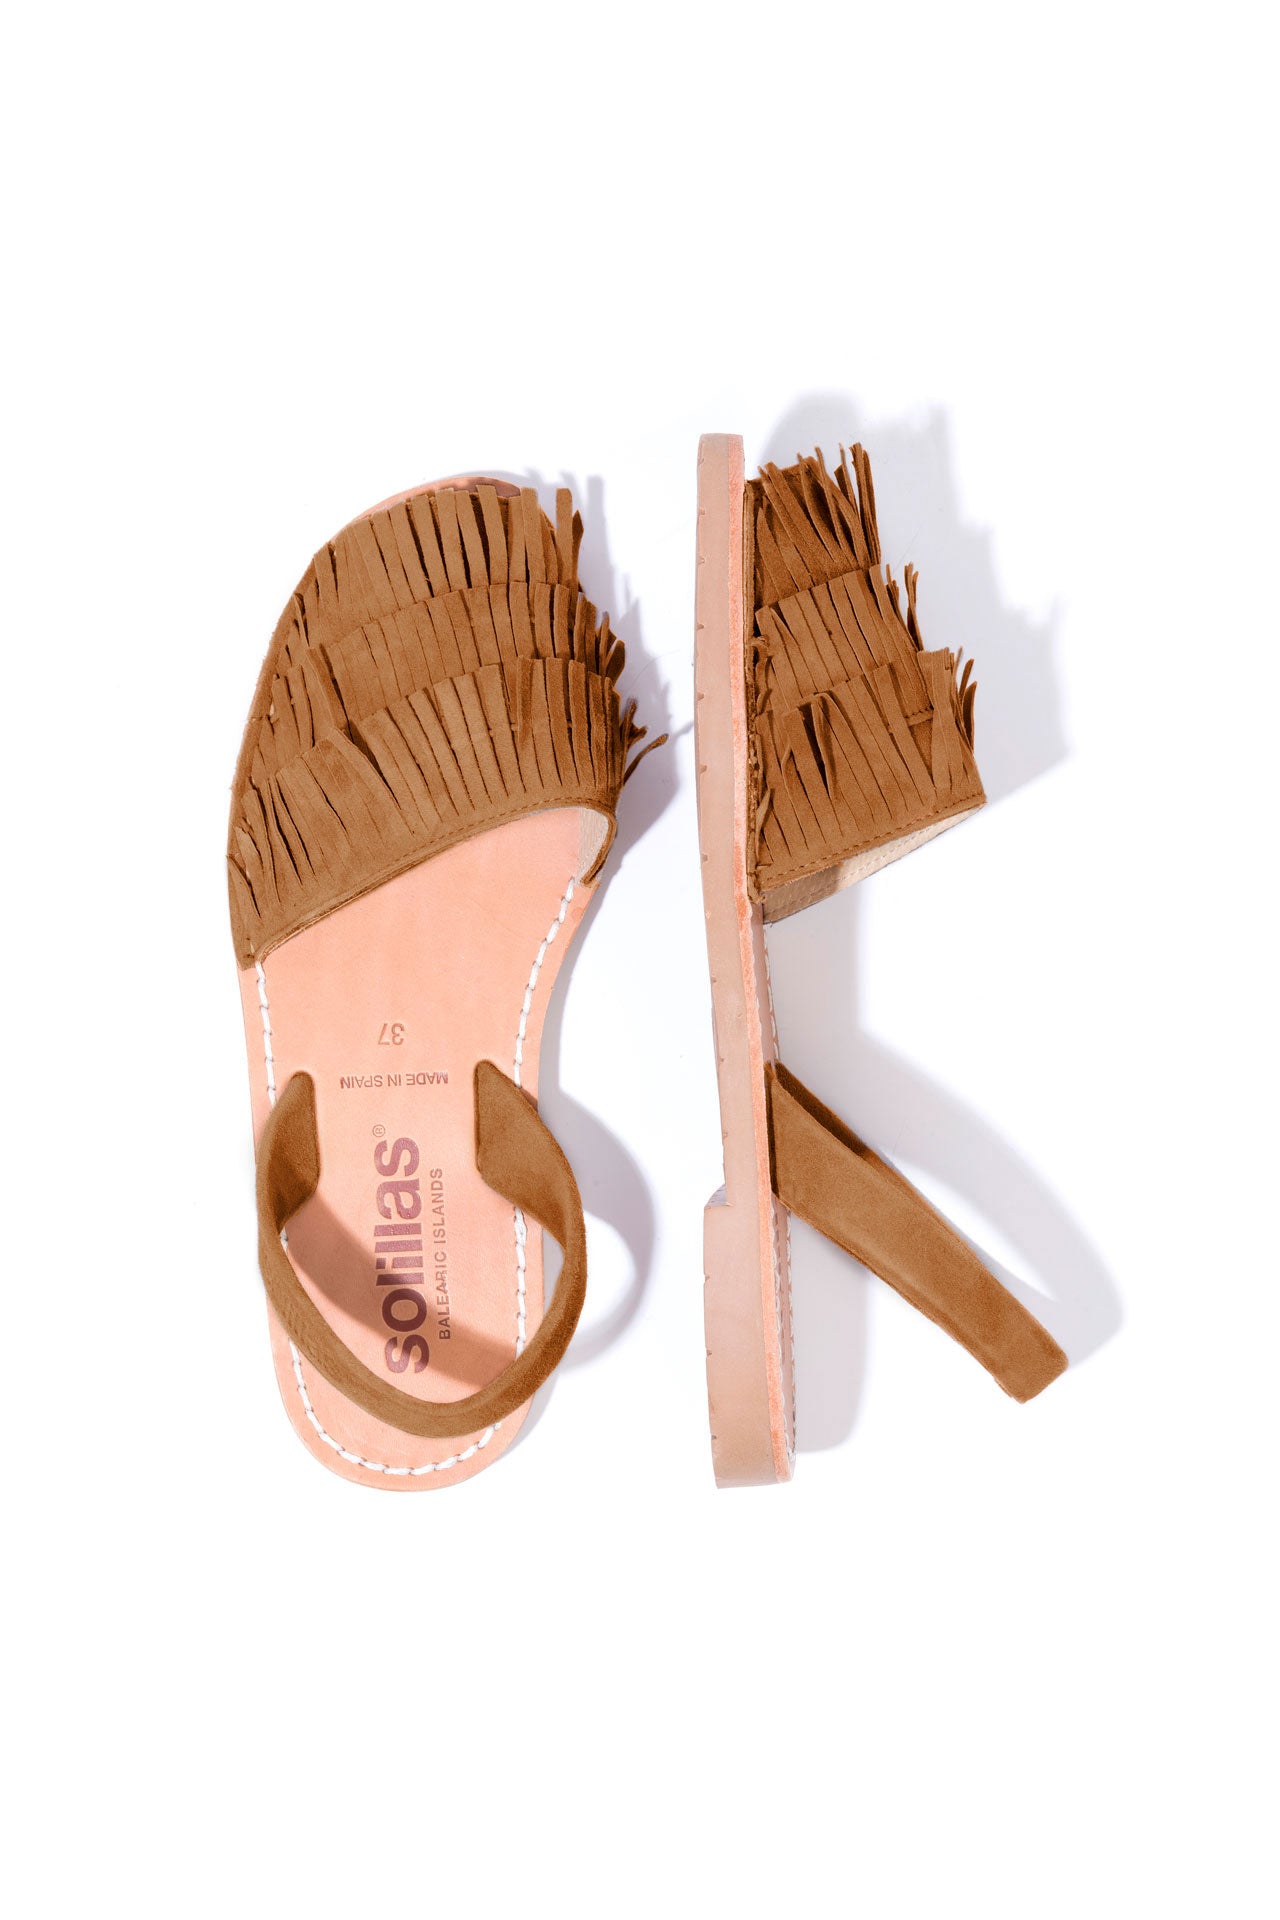 Cuero Franja - Tan Fringe Detail Leather Menorcan sandals